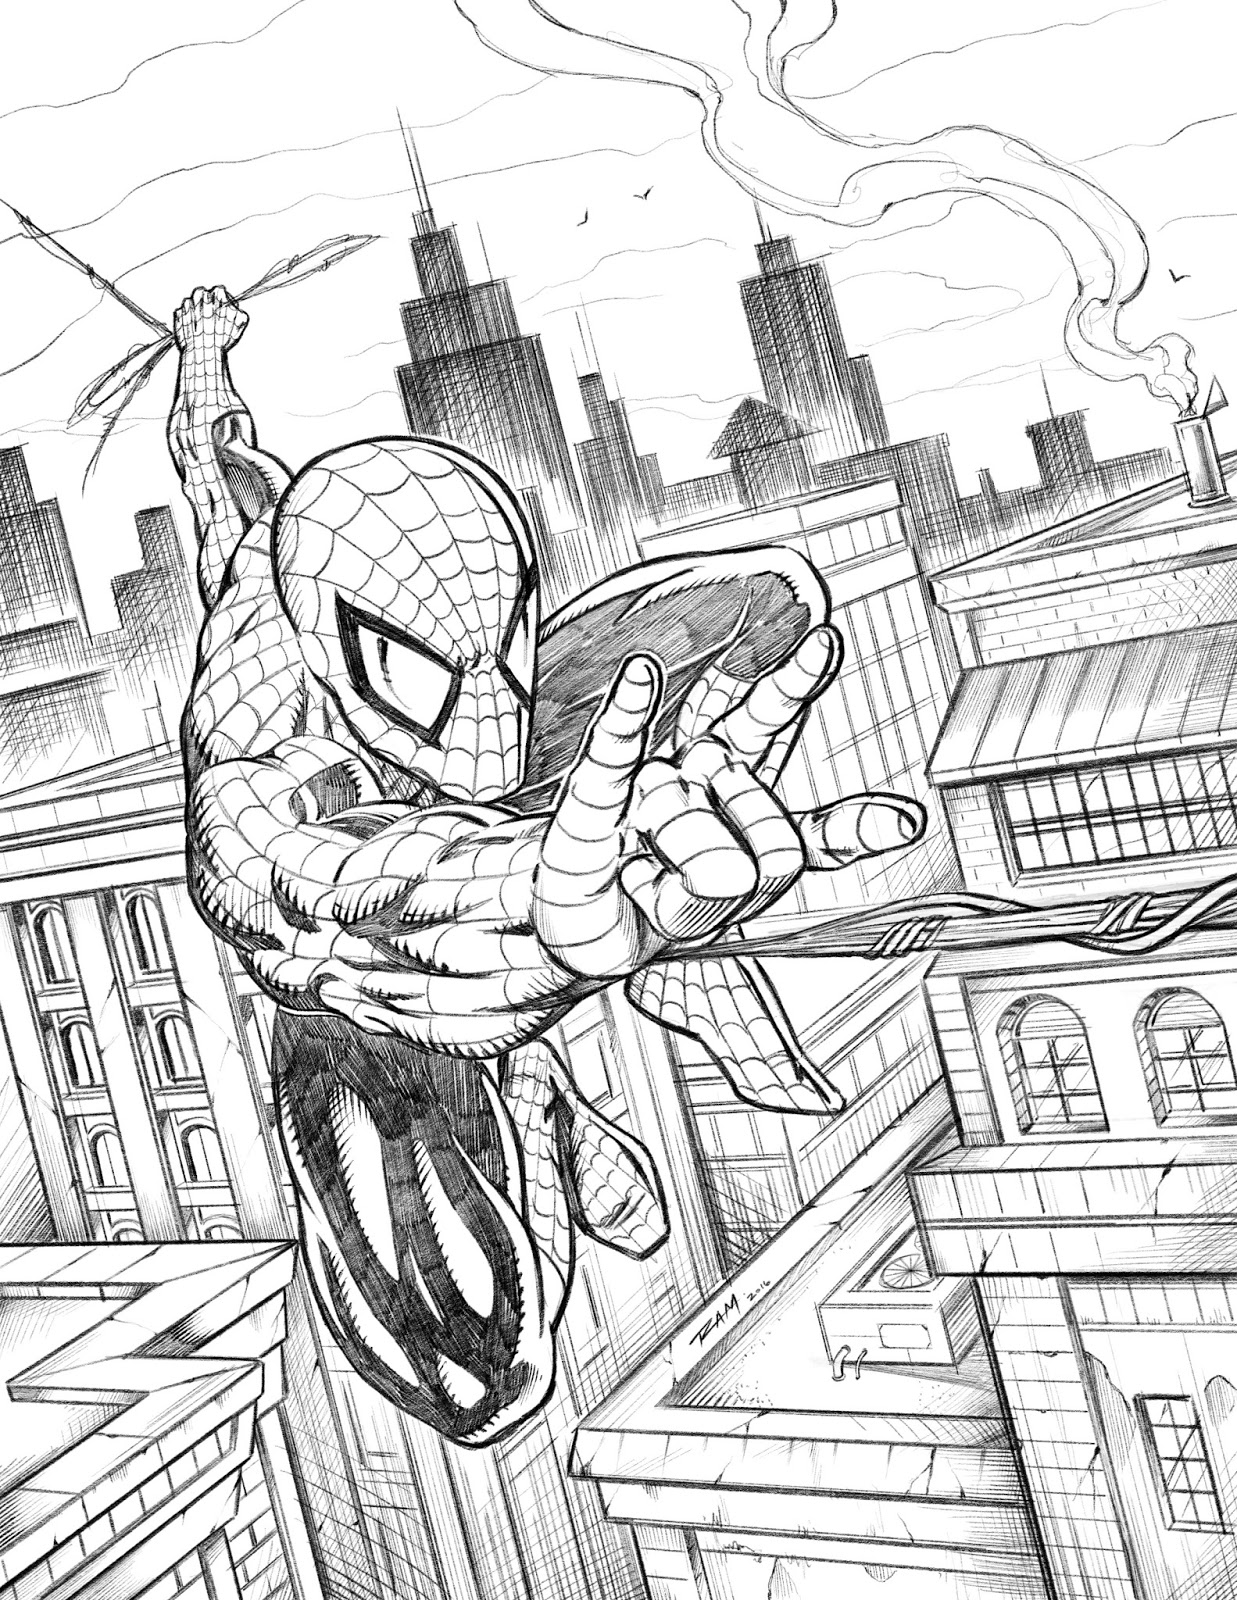 Ram Studios Comics: Drawing Spider-man on the iPad Pro in Procreate